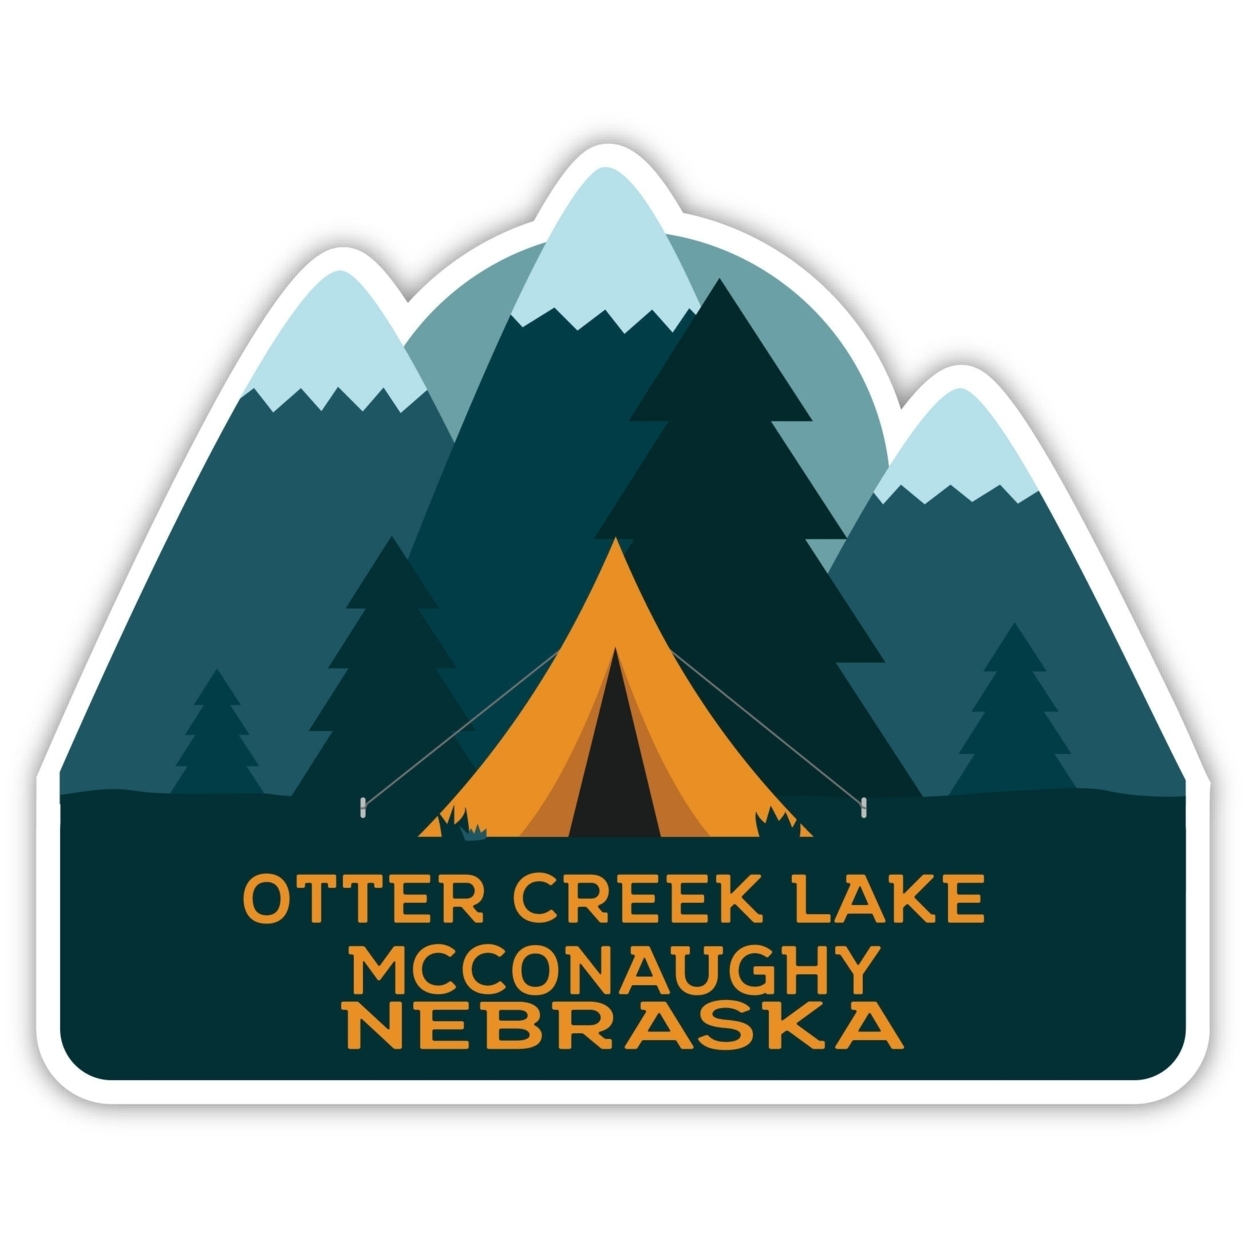 Otter Creek Lake Mcconaughy Nebraska Souvenir Decorative Stickers (Choose Theme And Size) - Single Unit, 2-Inch, Tent